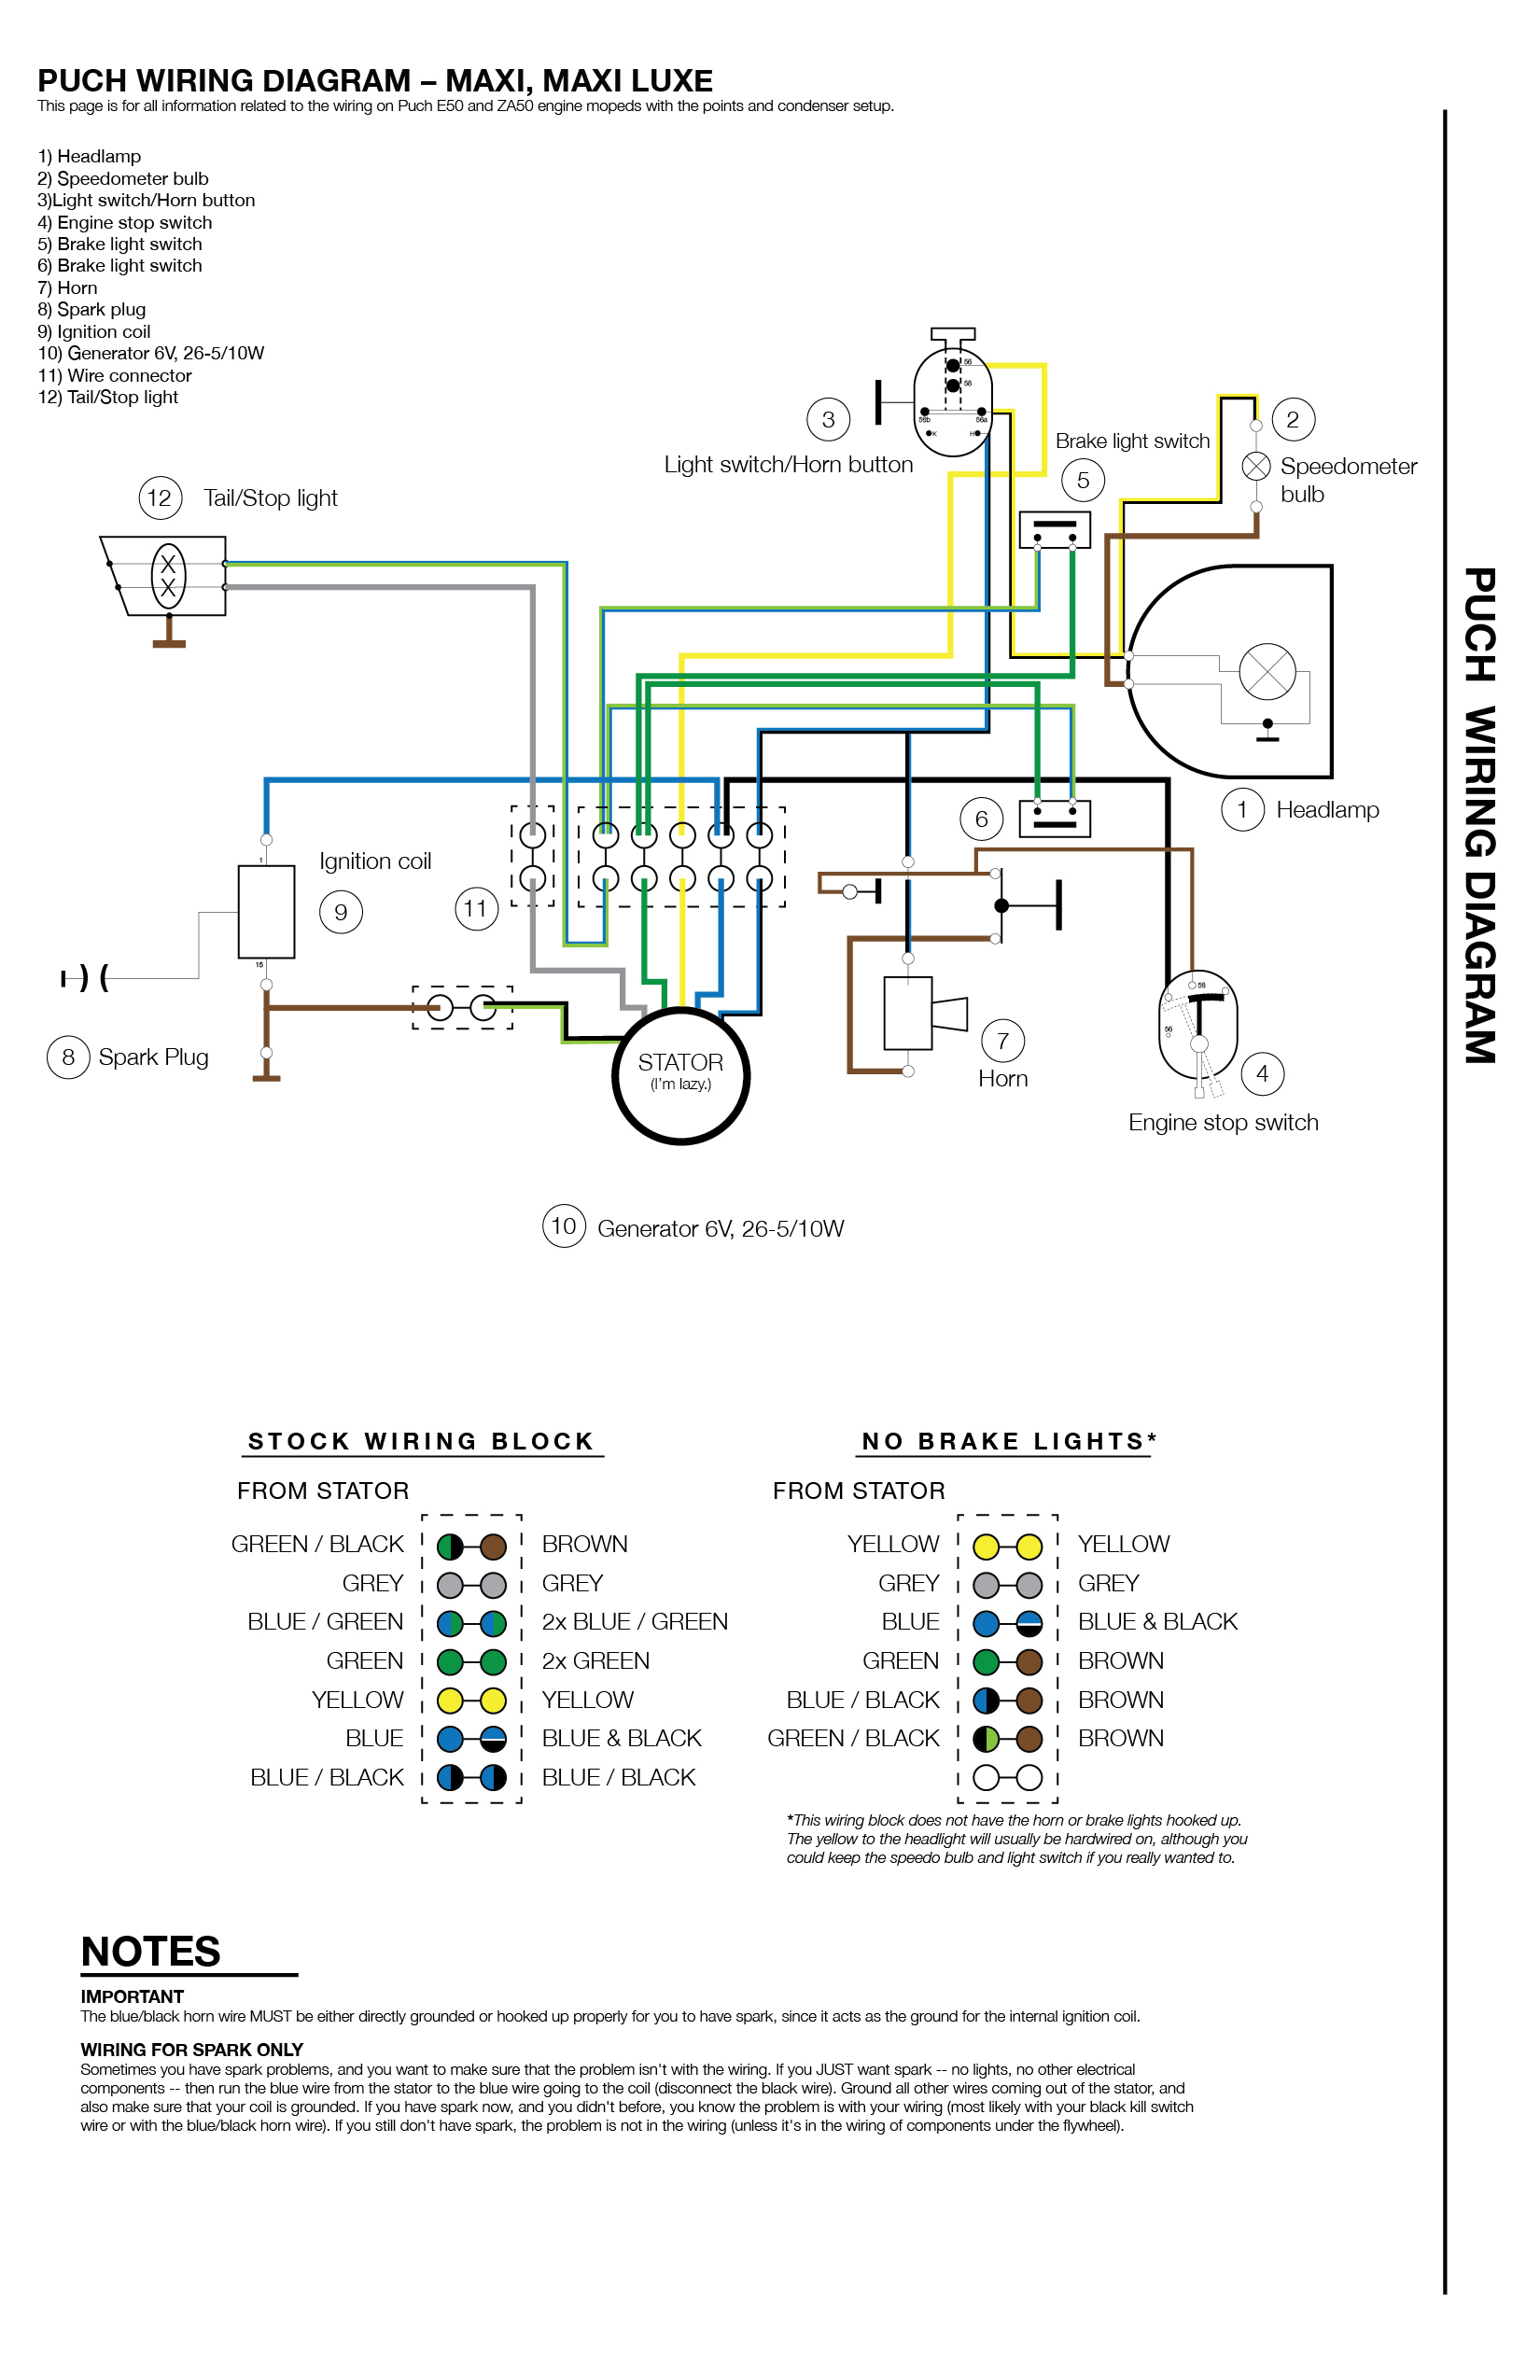 Puch Wiring - Moped Wiki - Brake Lights Wiring Diagram